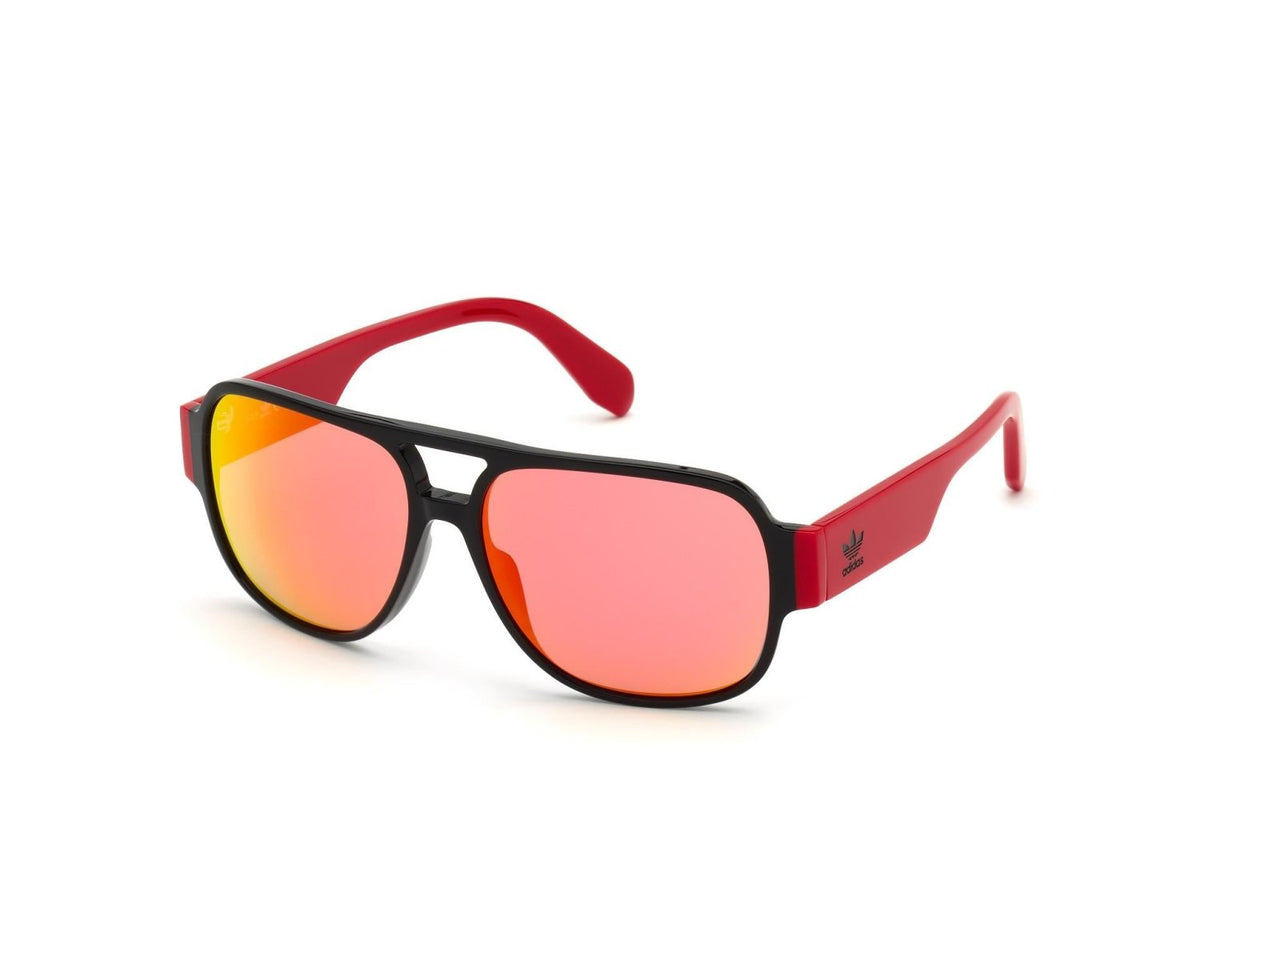 ADIDAS ORIGINALS 0006 Sunglasses